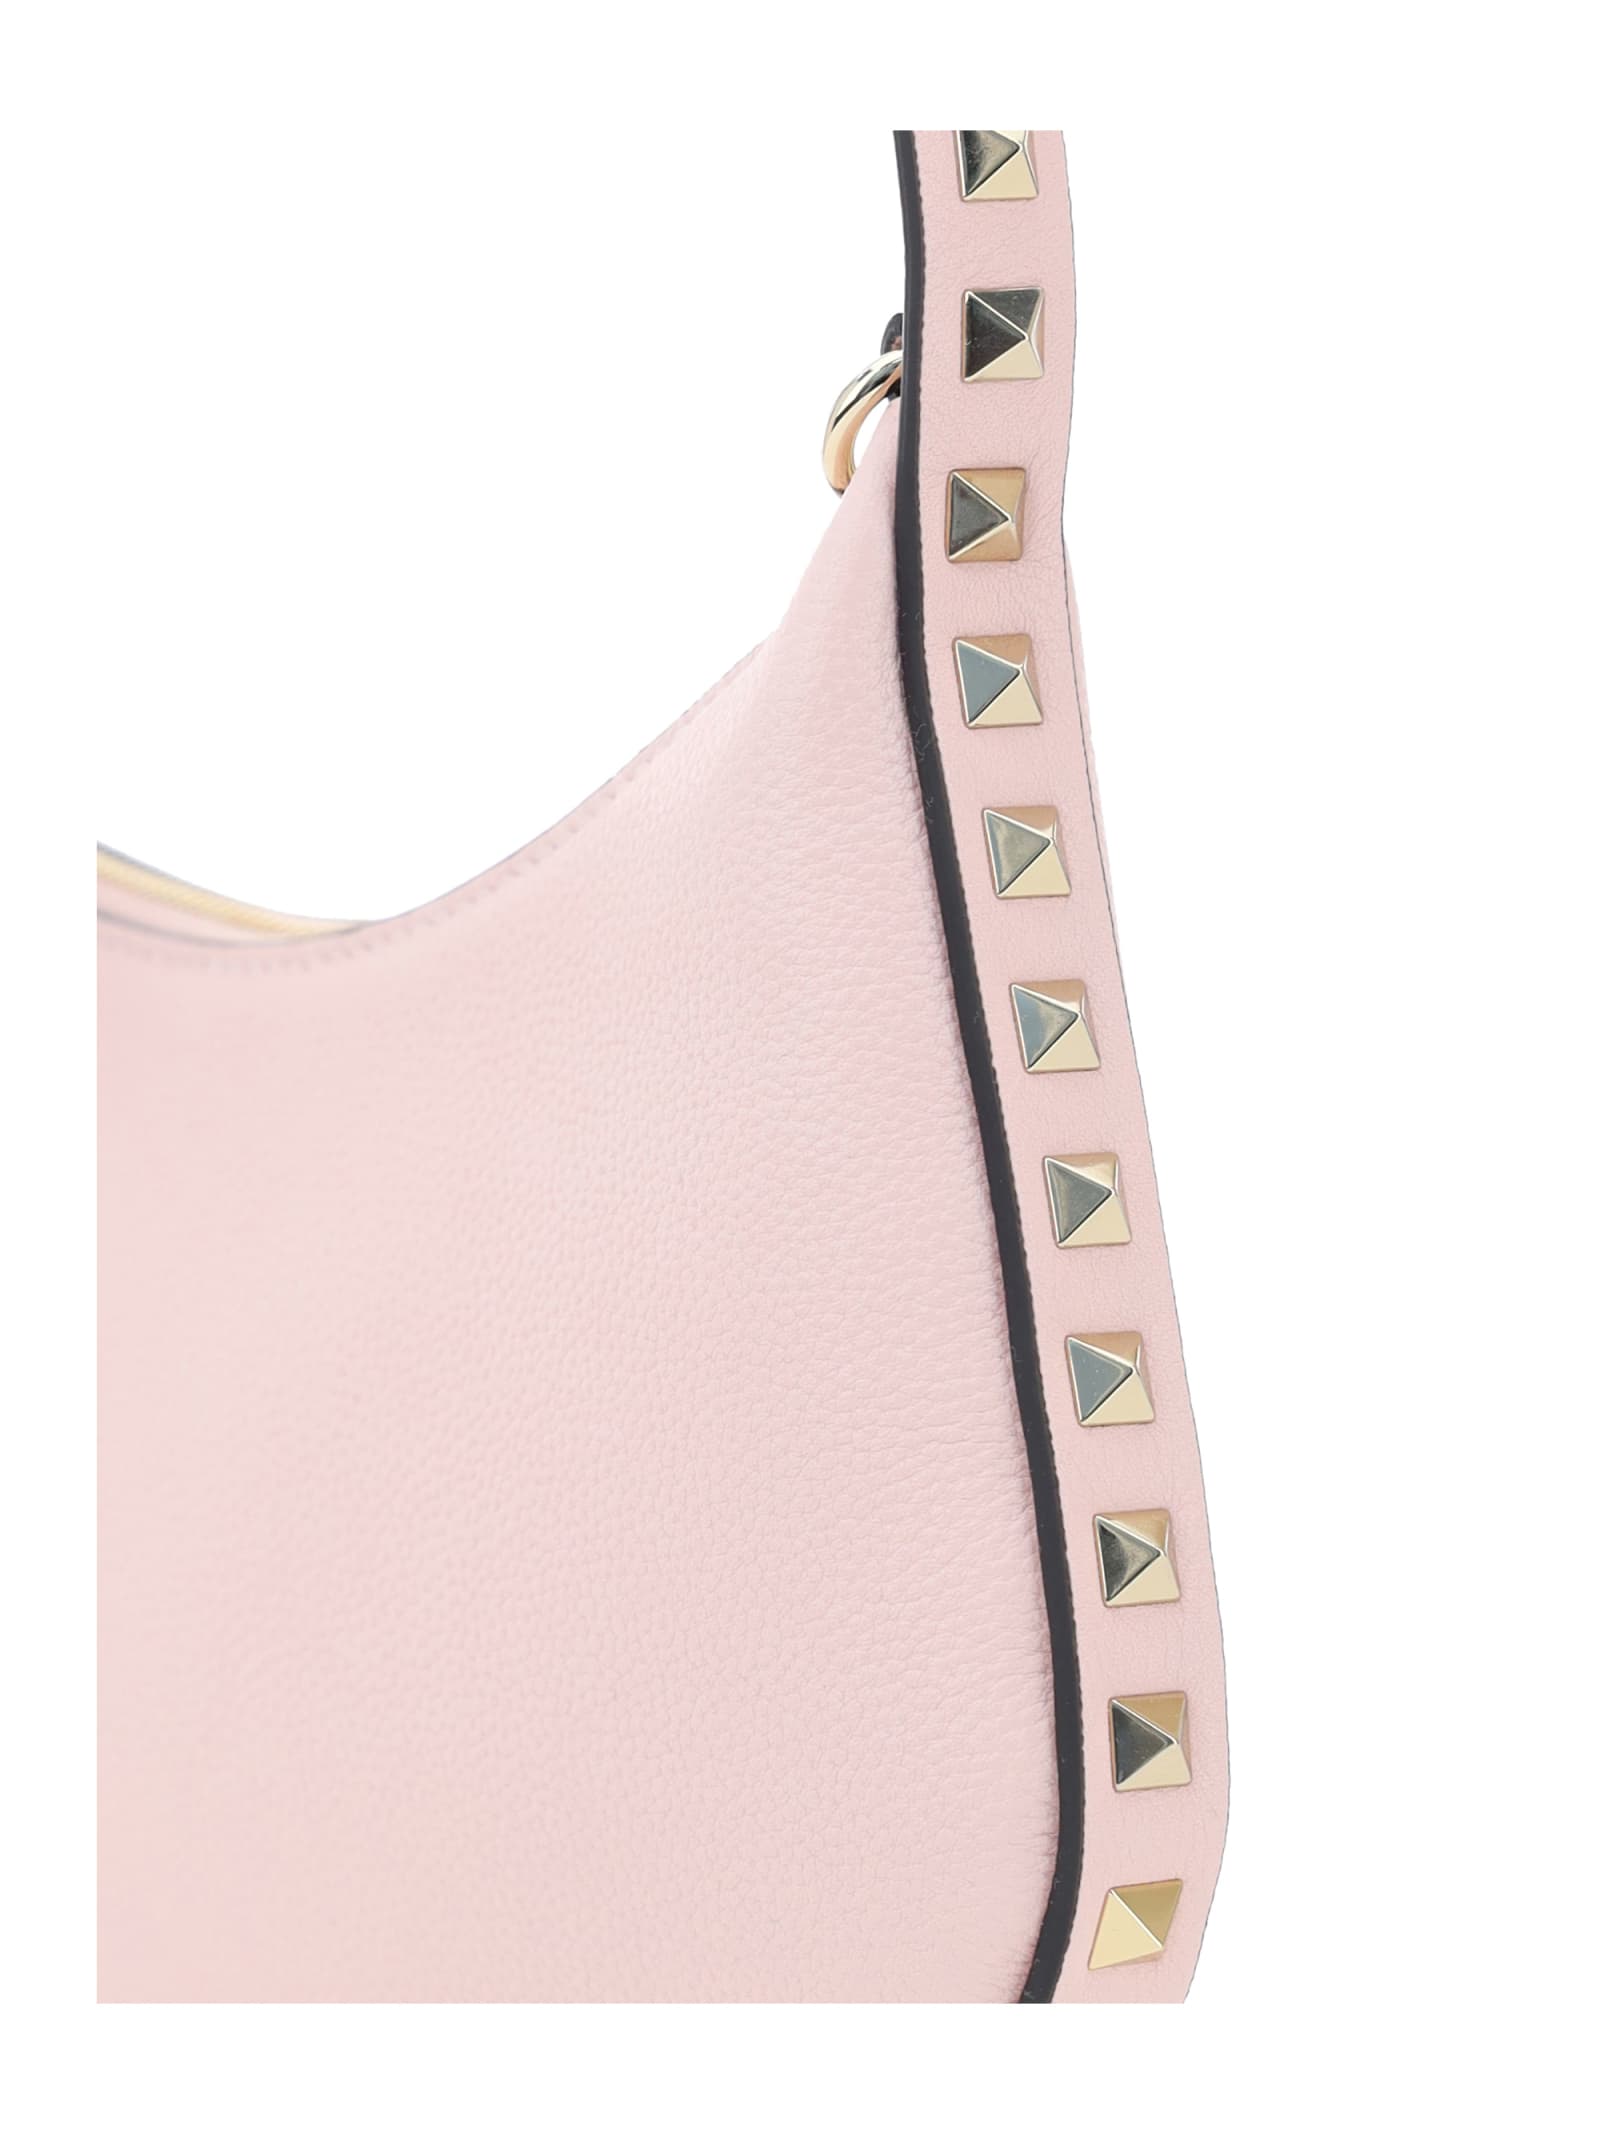 Shop Valentino Garavani Rockstud Mini Hobo Shoulder Bag In Pink